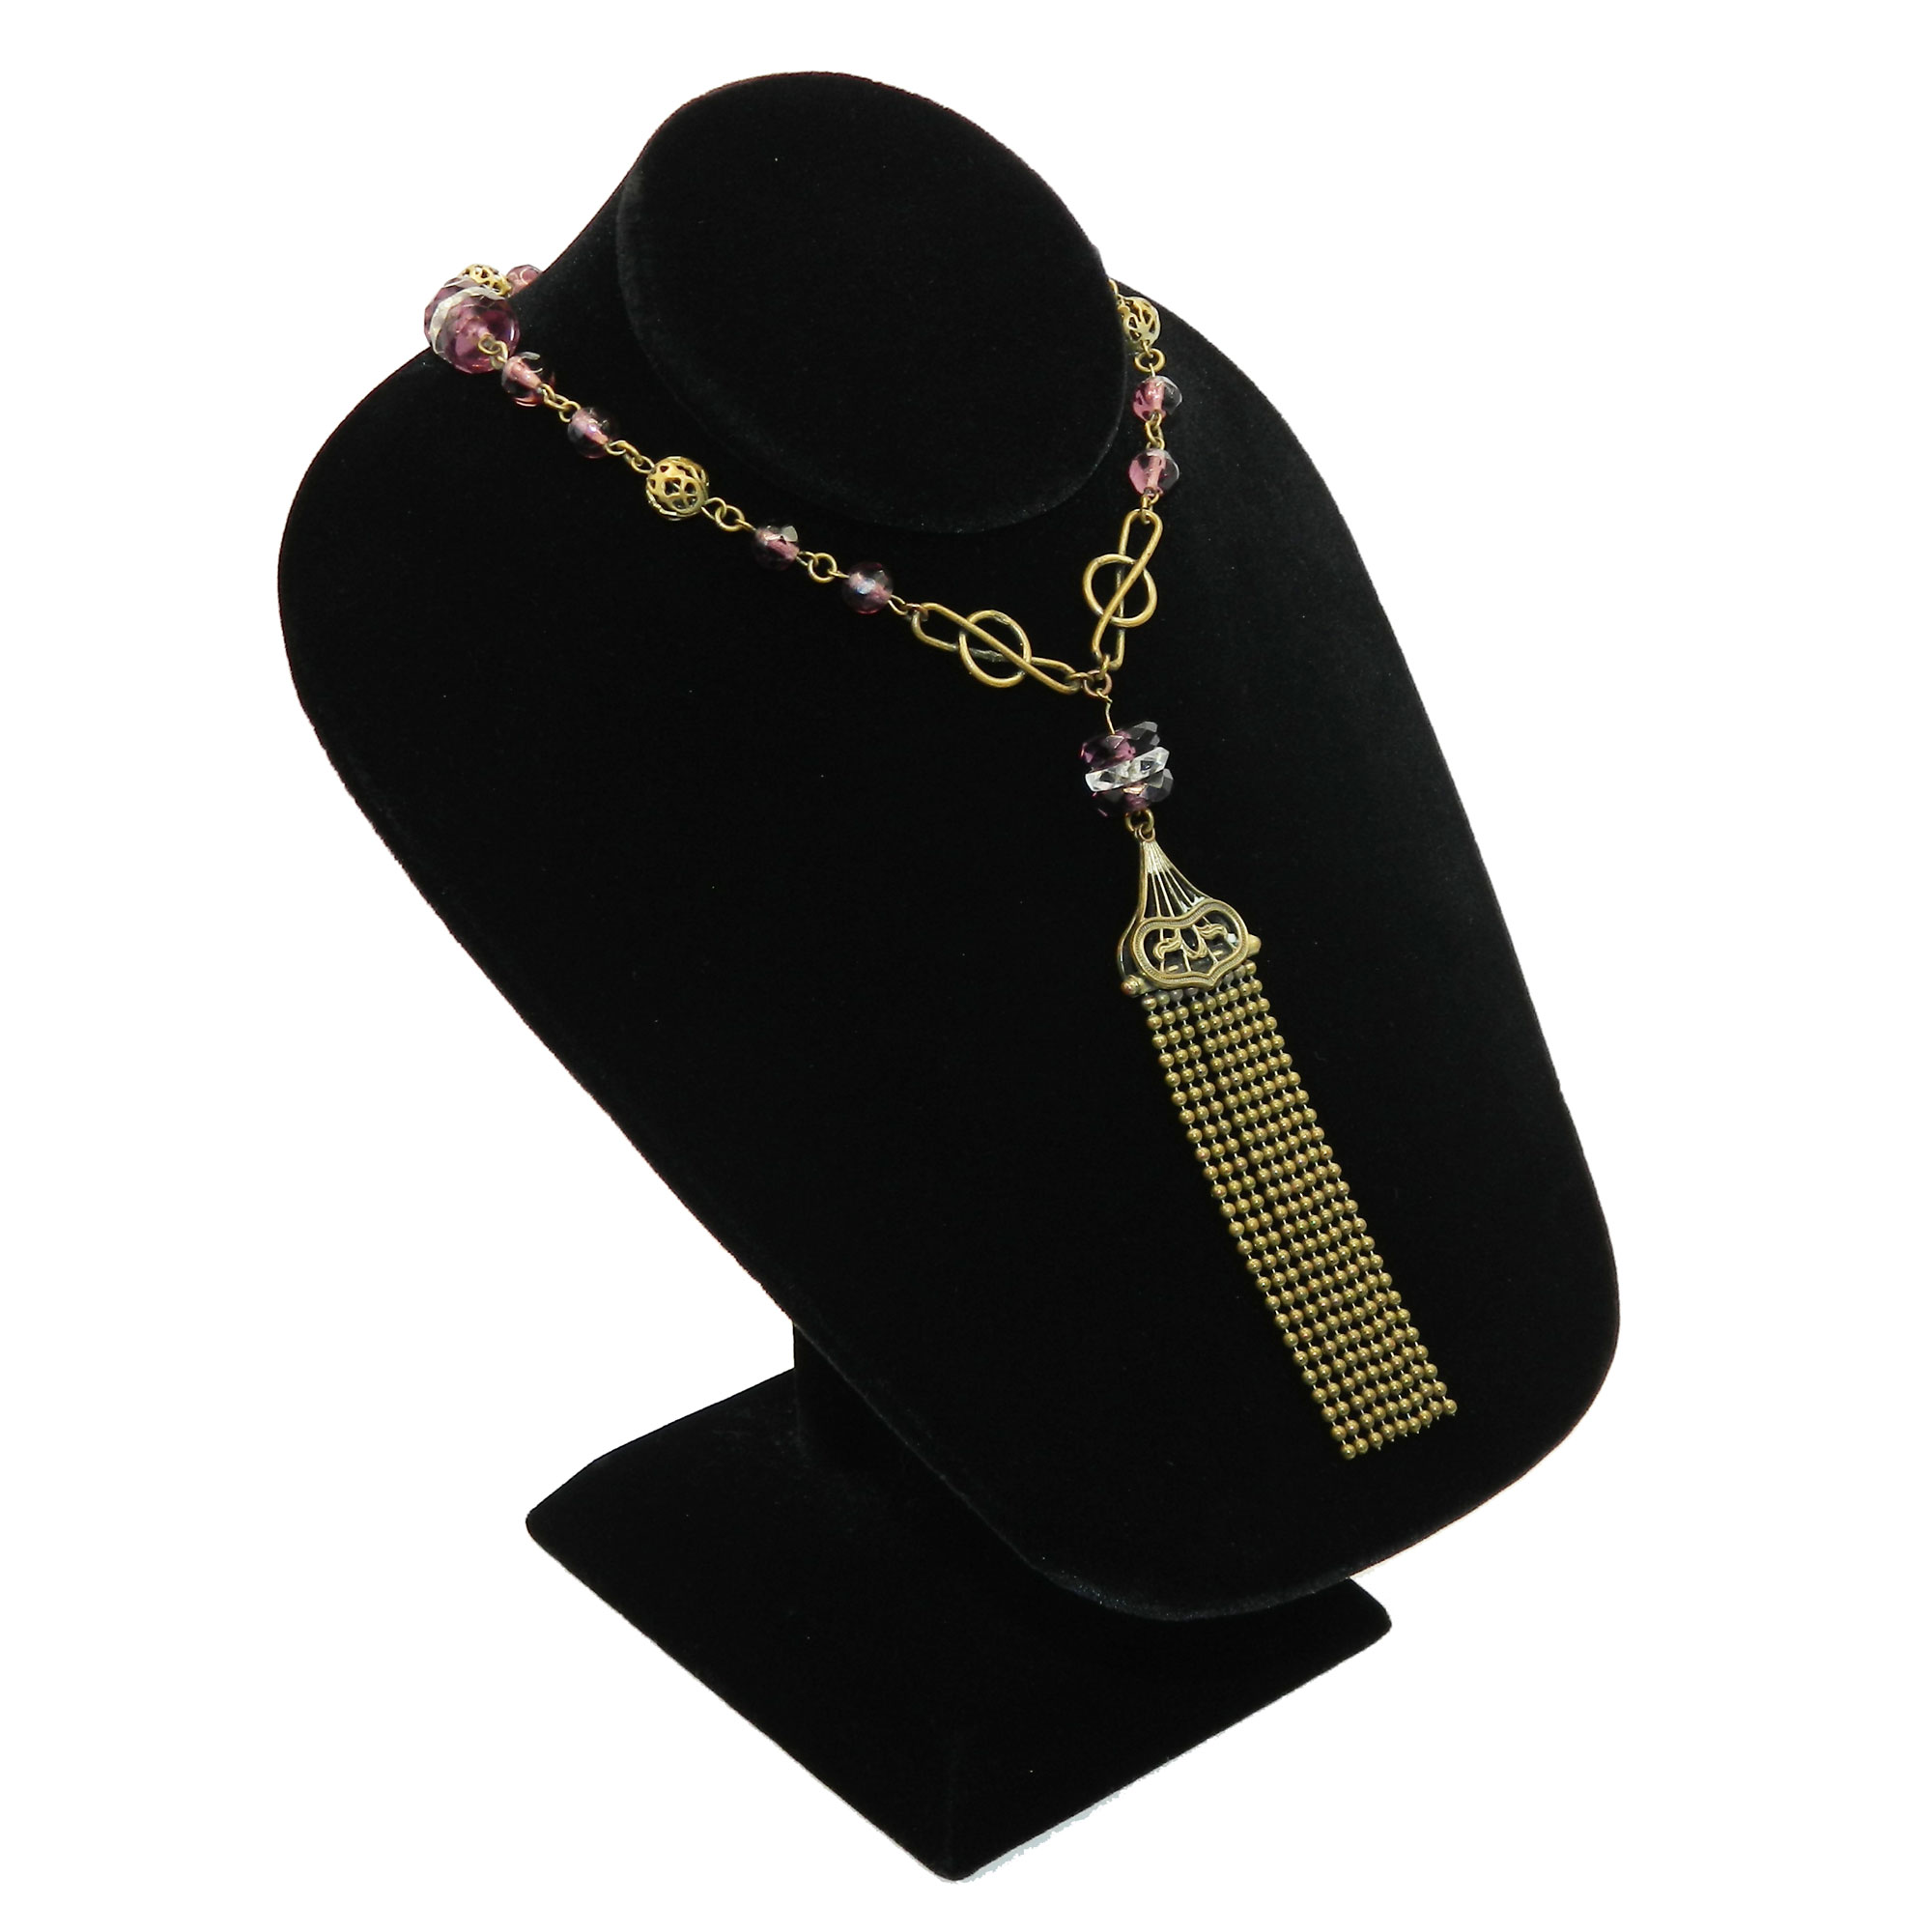 Art Deco beaded pendant necklace